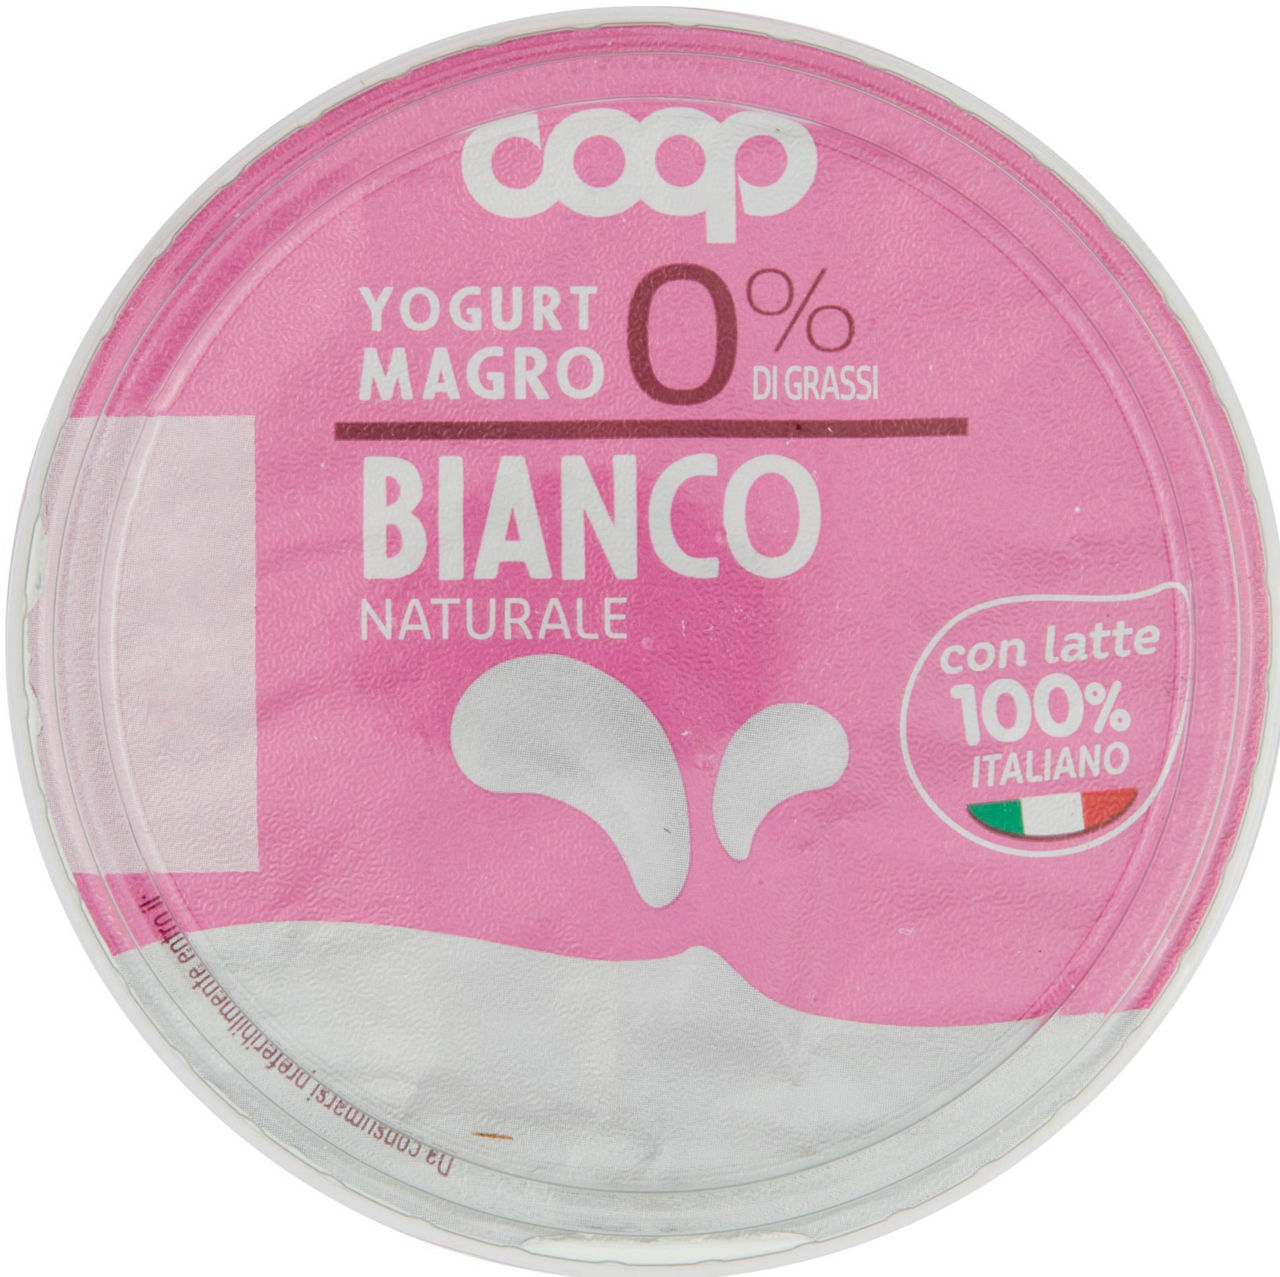 YOGURT MAGRO COOP 0% BIANCO 500 G - 4